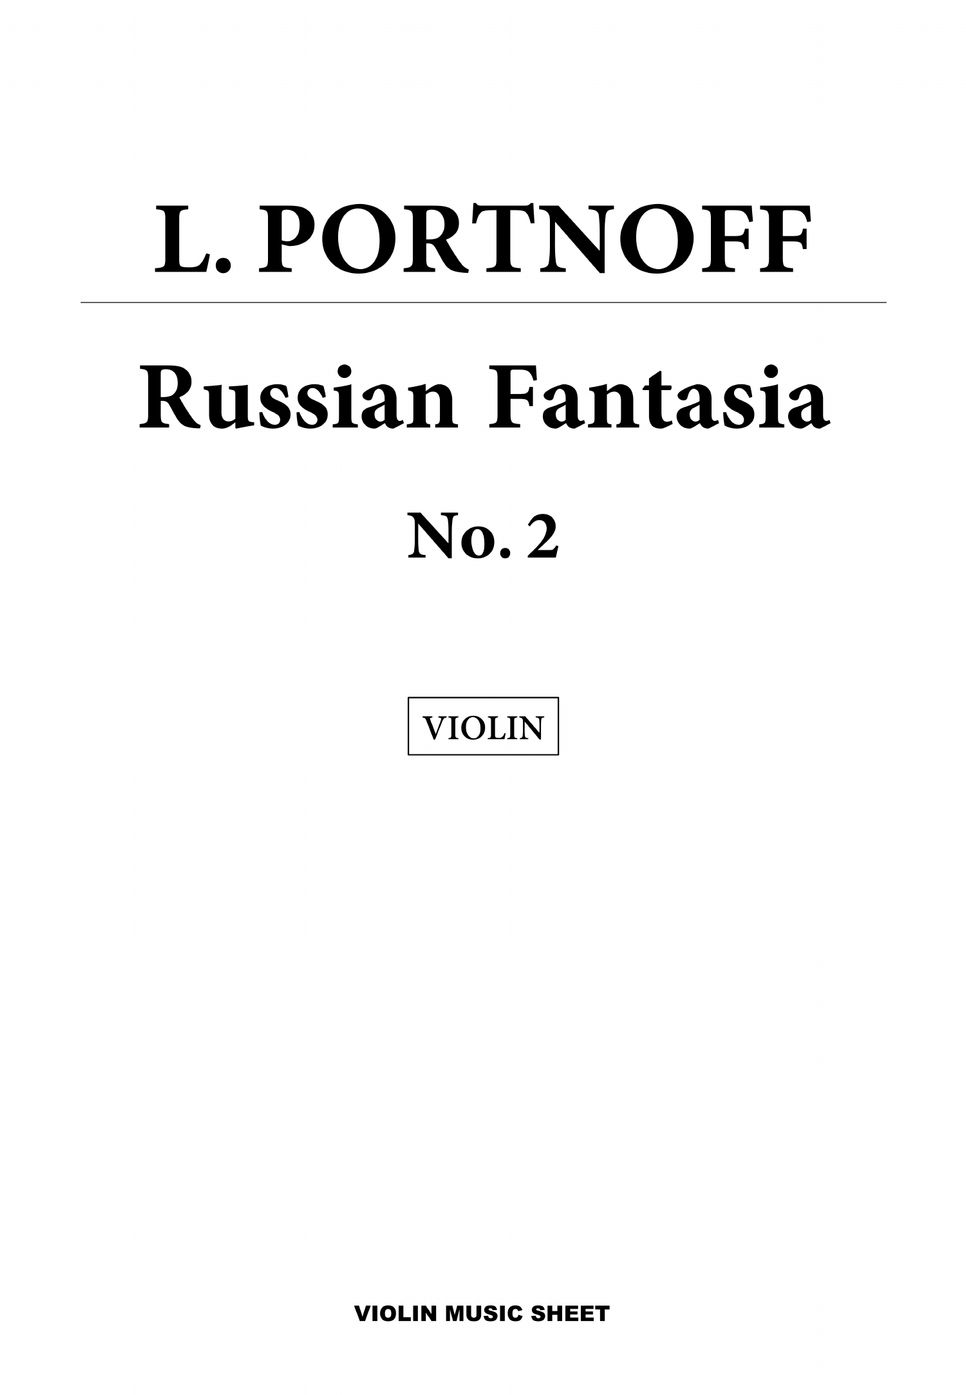 Portnoff - Russian Fantasia No.2 (MR포함) by Lee